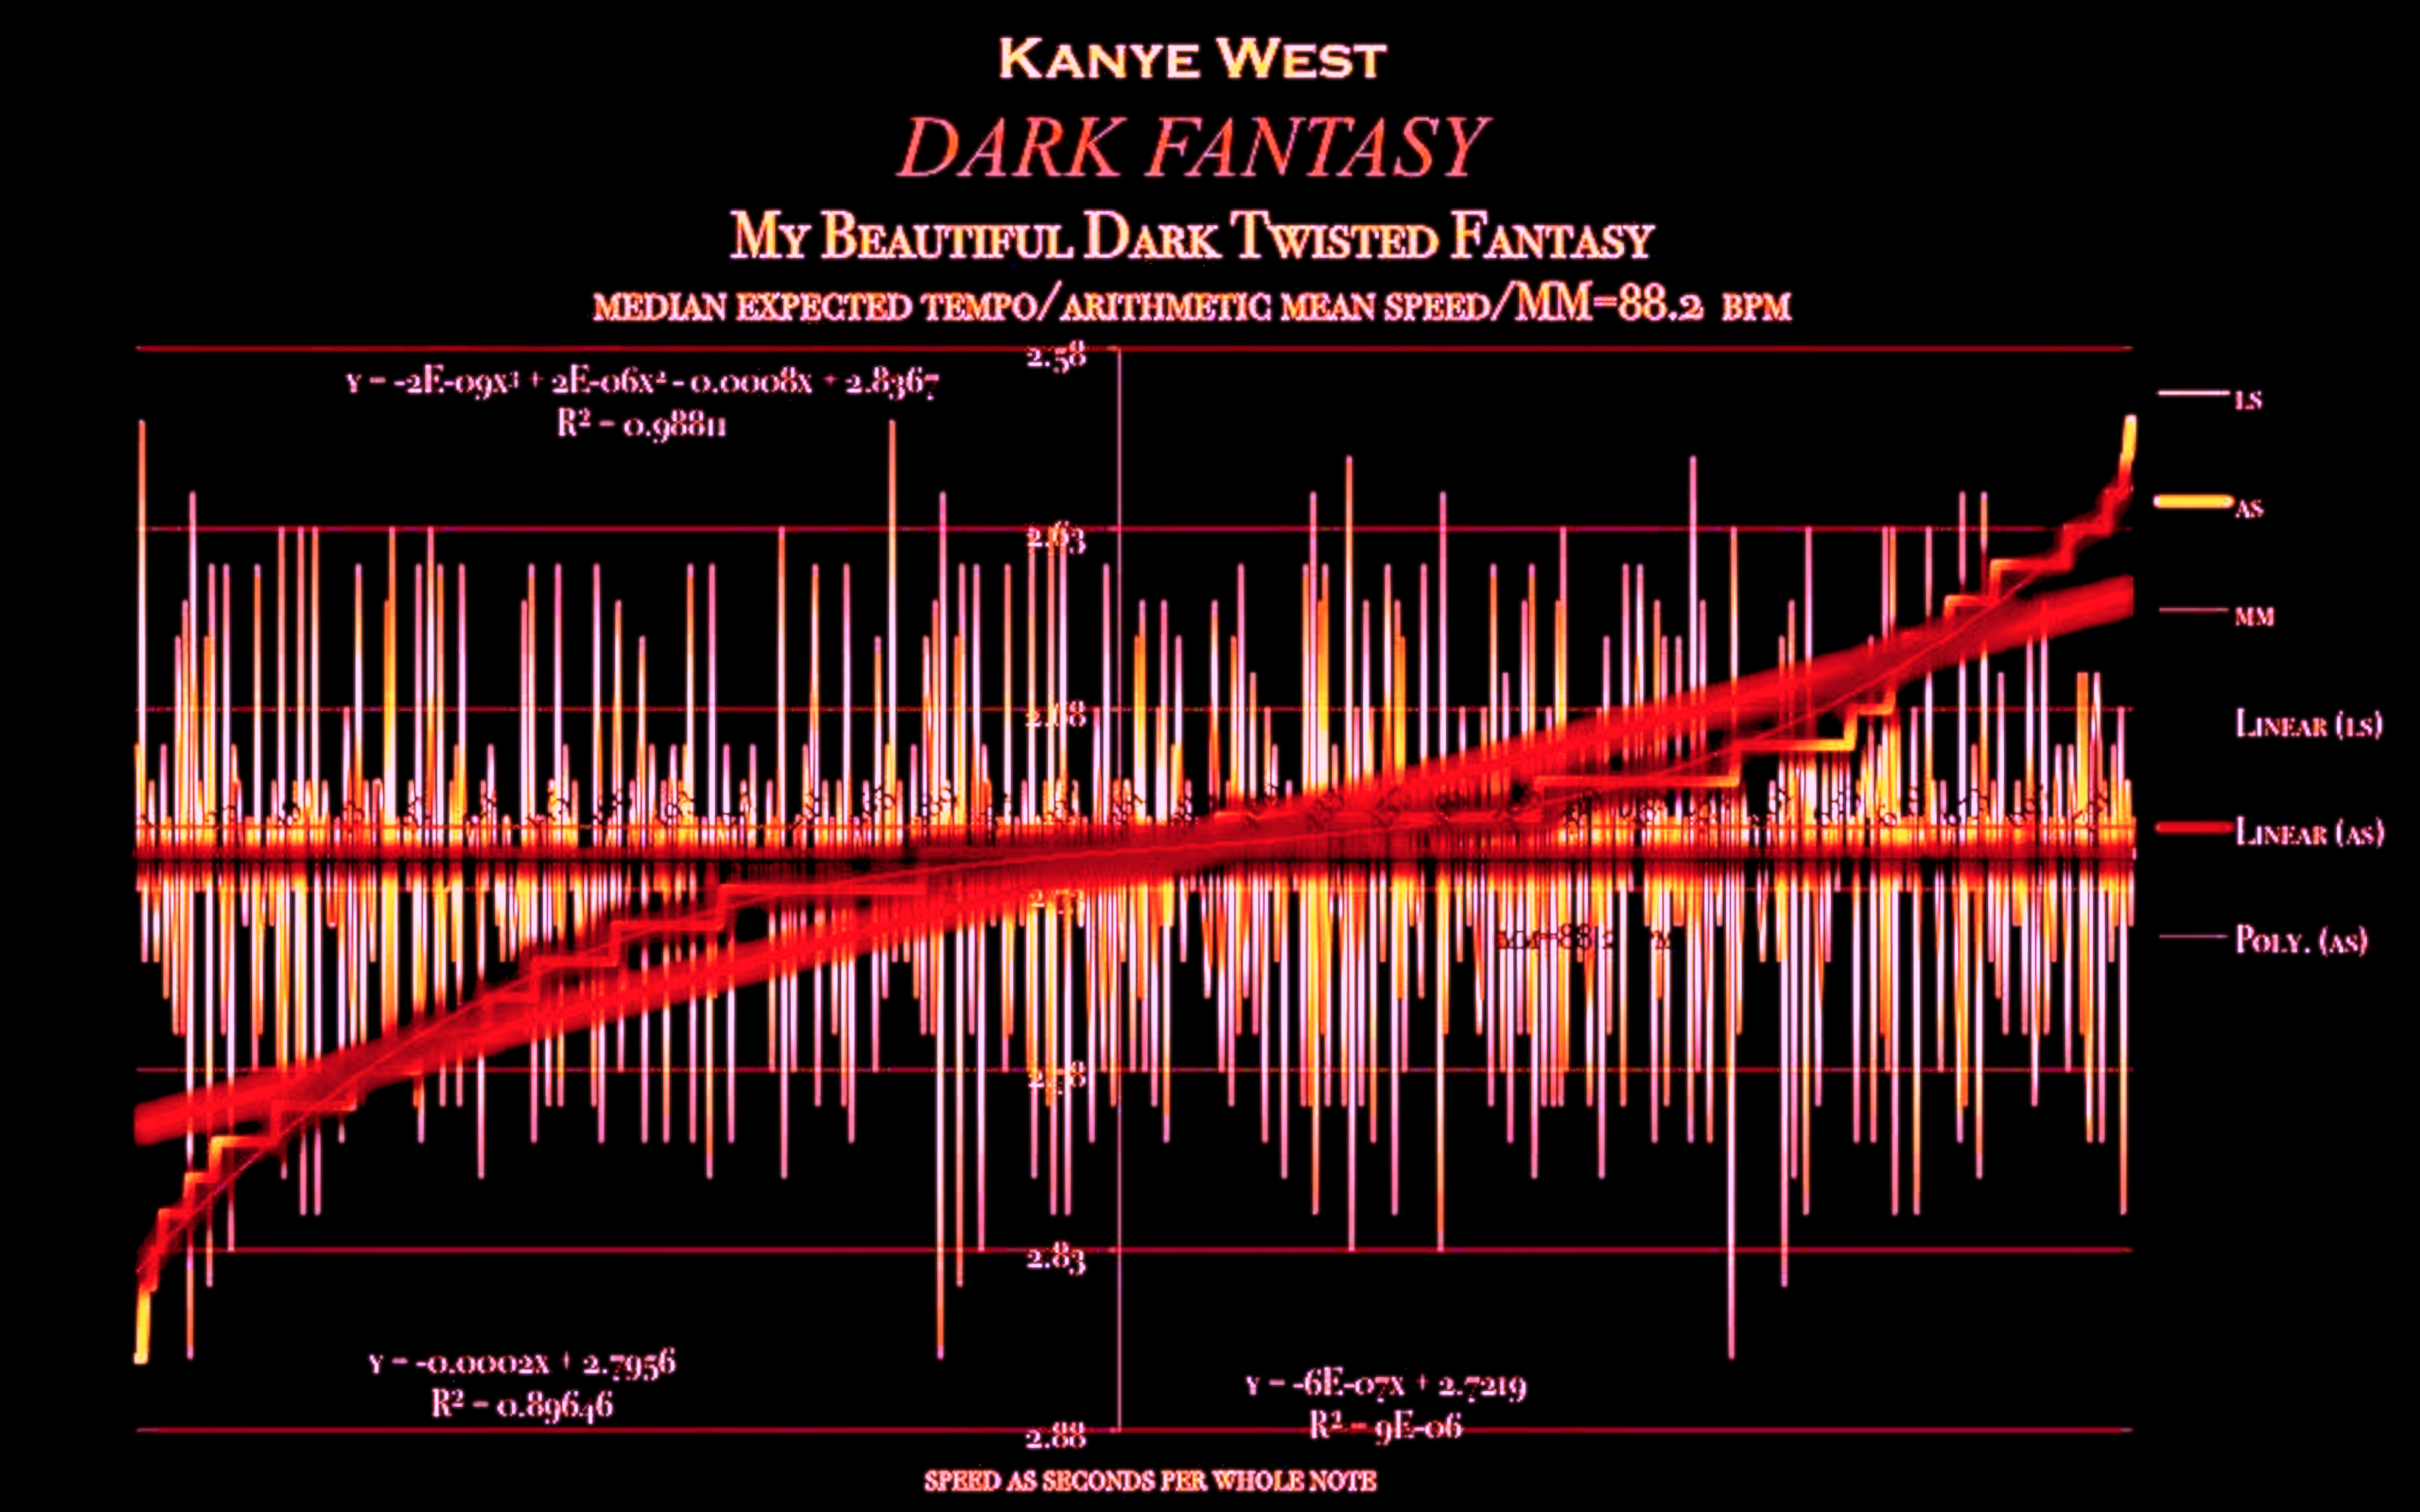 Kanye-West-Dark_Fantasy-median-expected-matherton-tempo-diagram copy